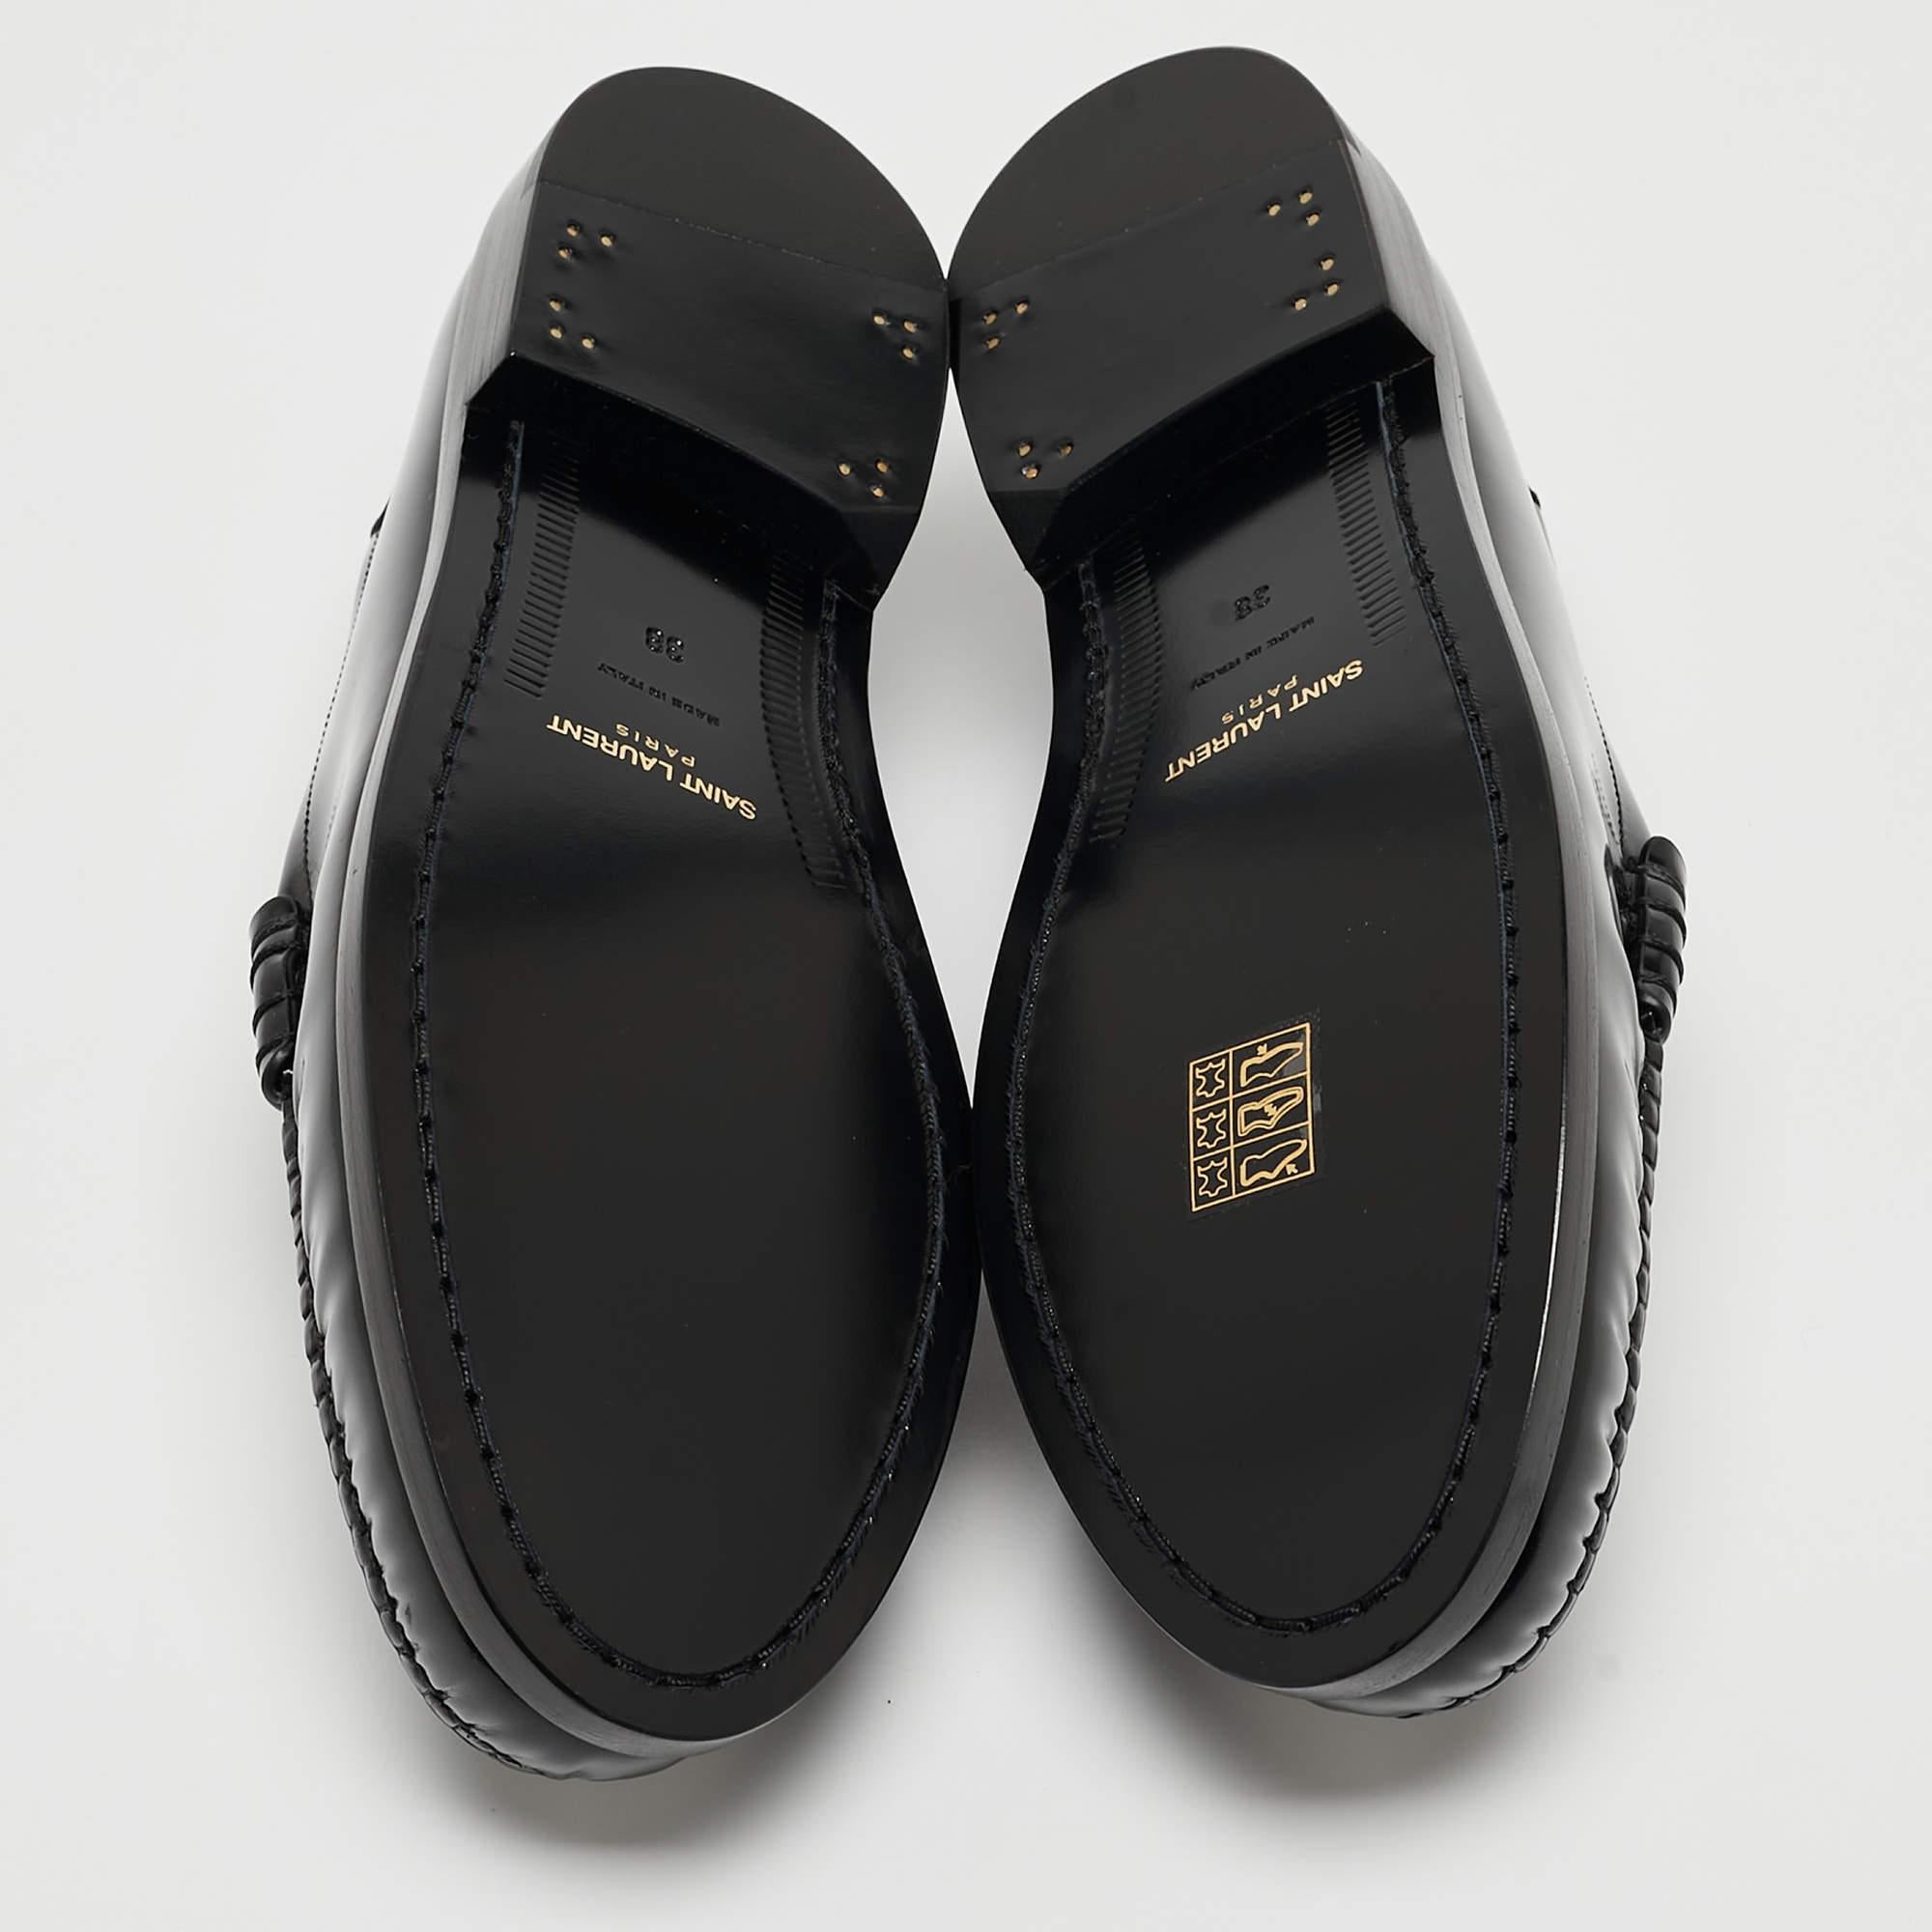 Saint Laurent Black Leather Penny Slip On Loafers Size 38 5